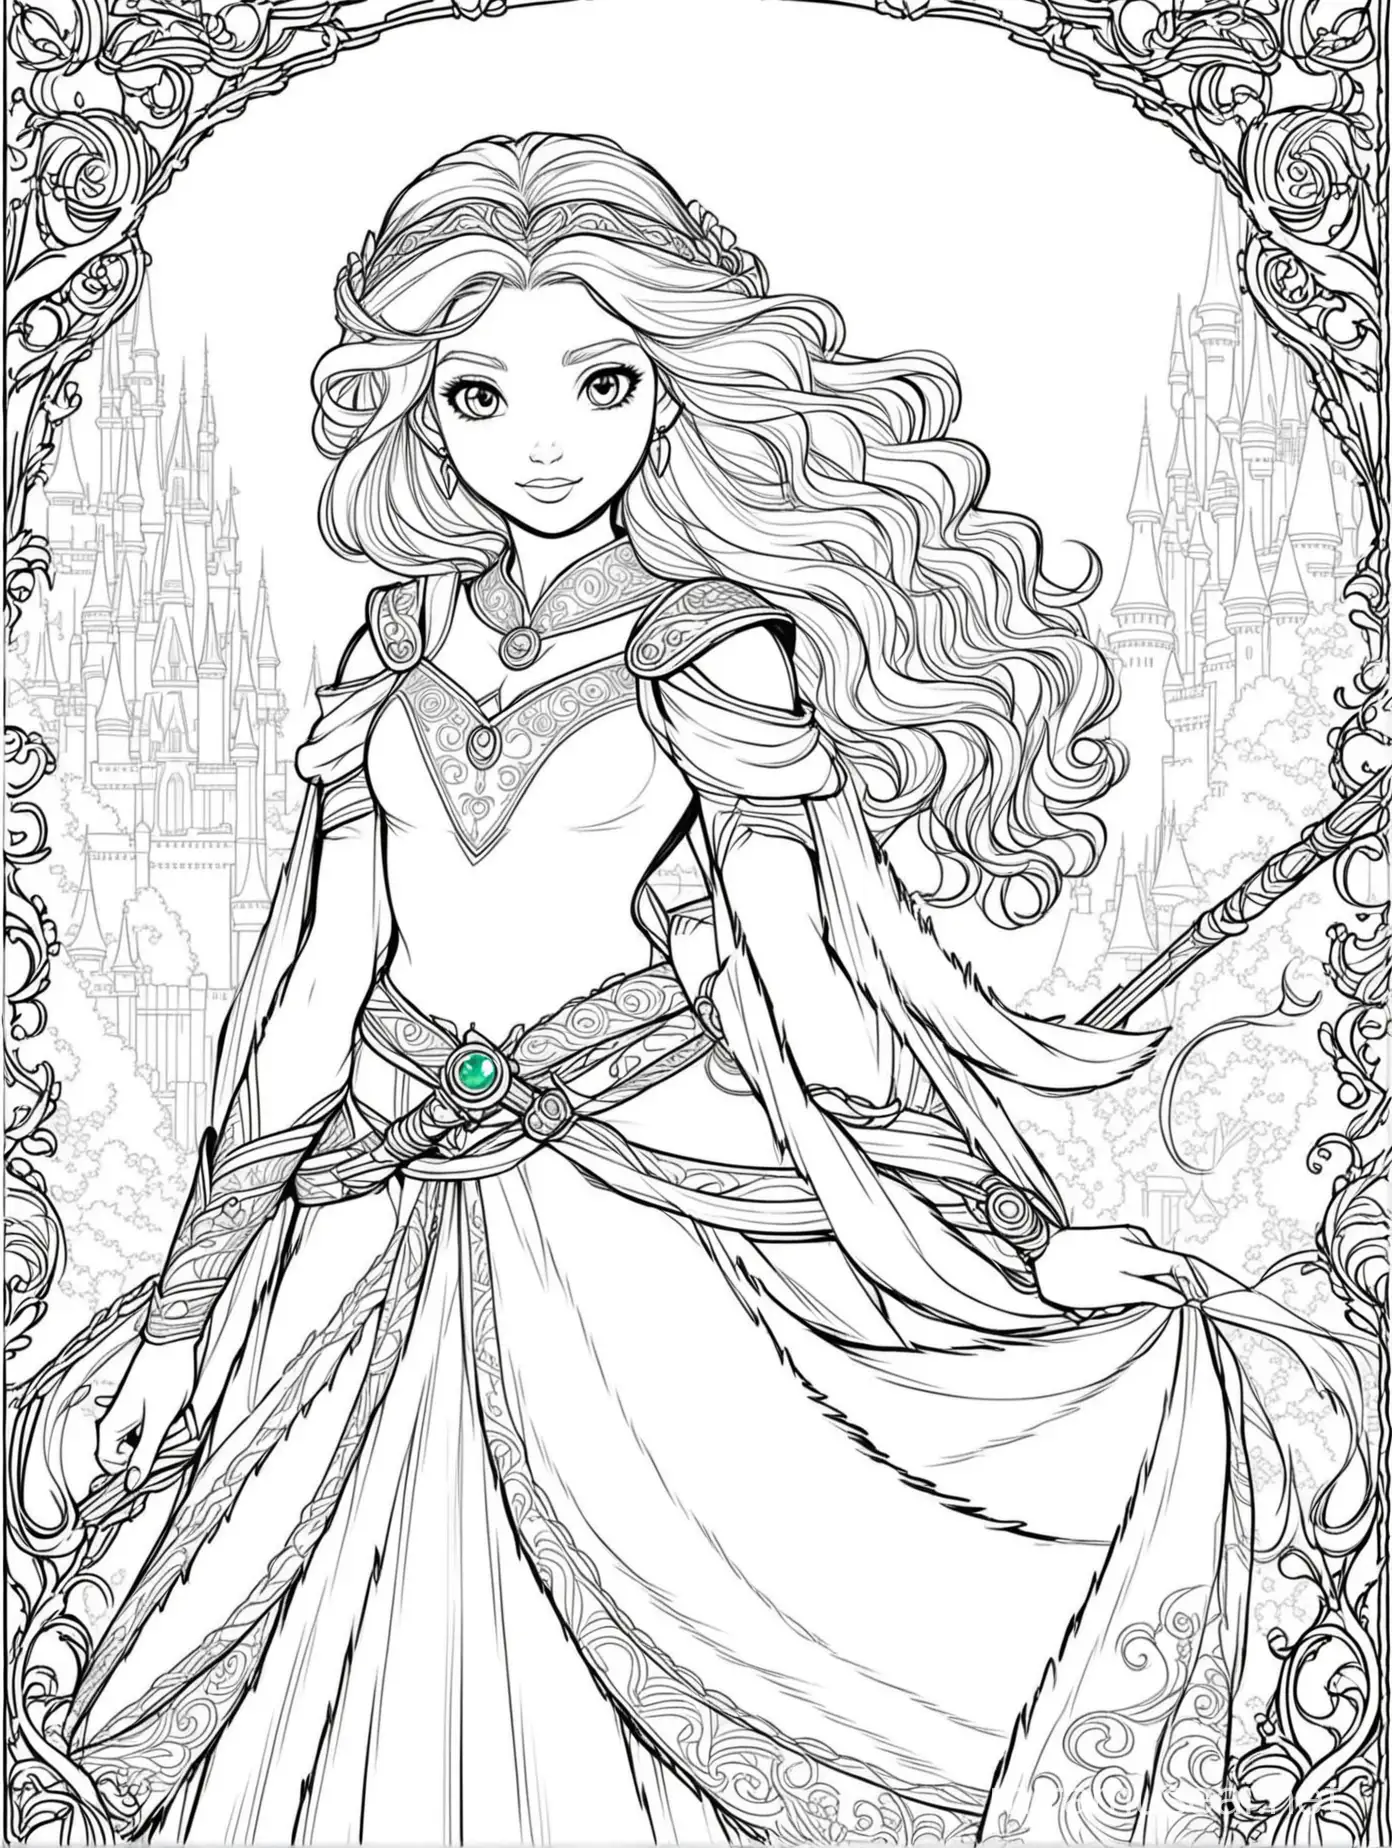 Disney Princess Merida Coloring Book Black and White Illustrations of Braves Heroine